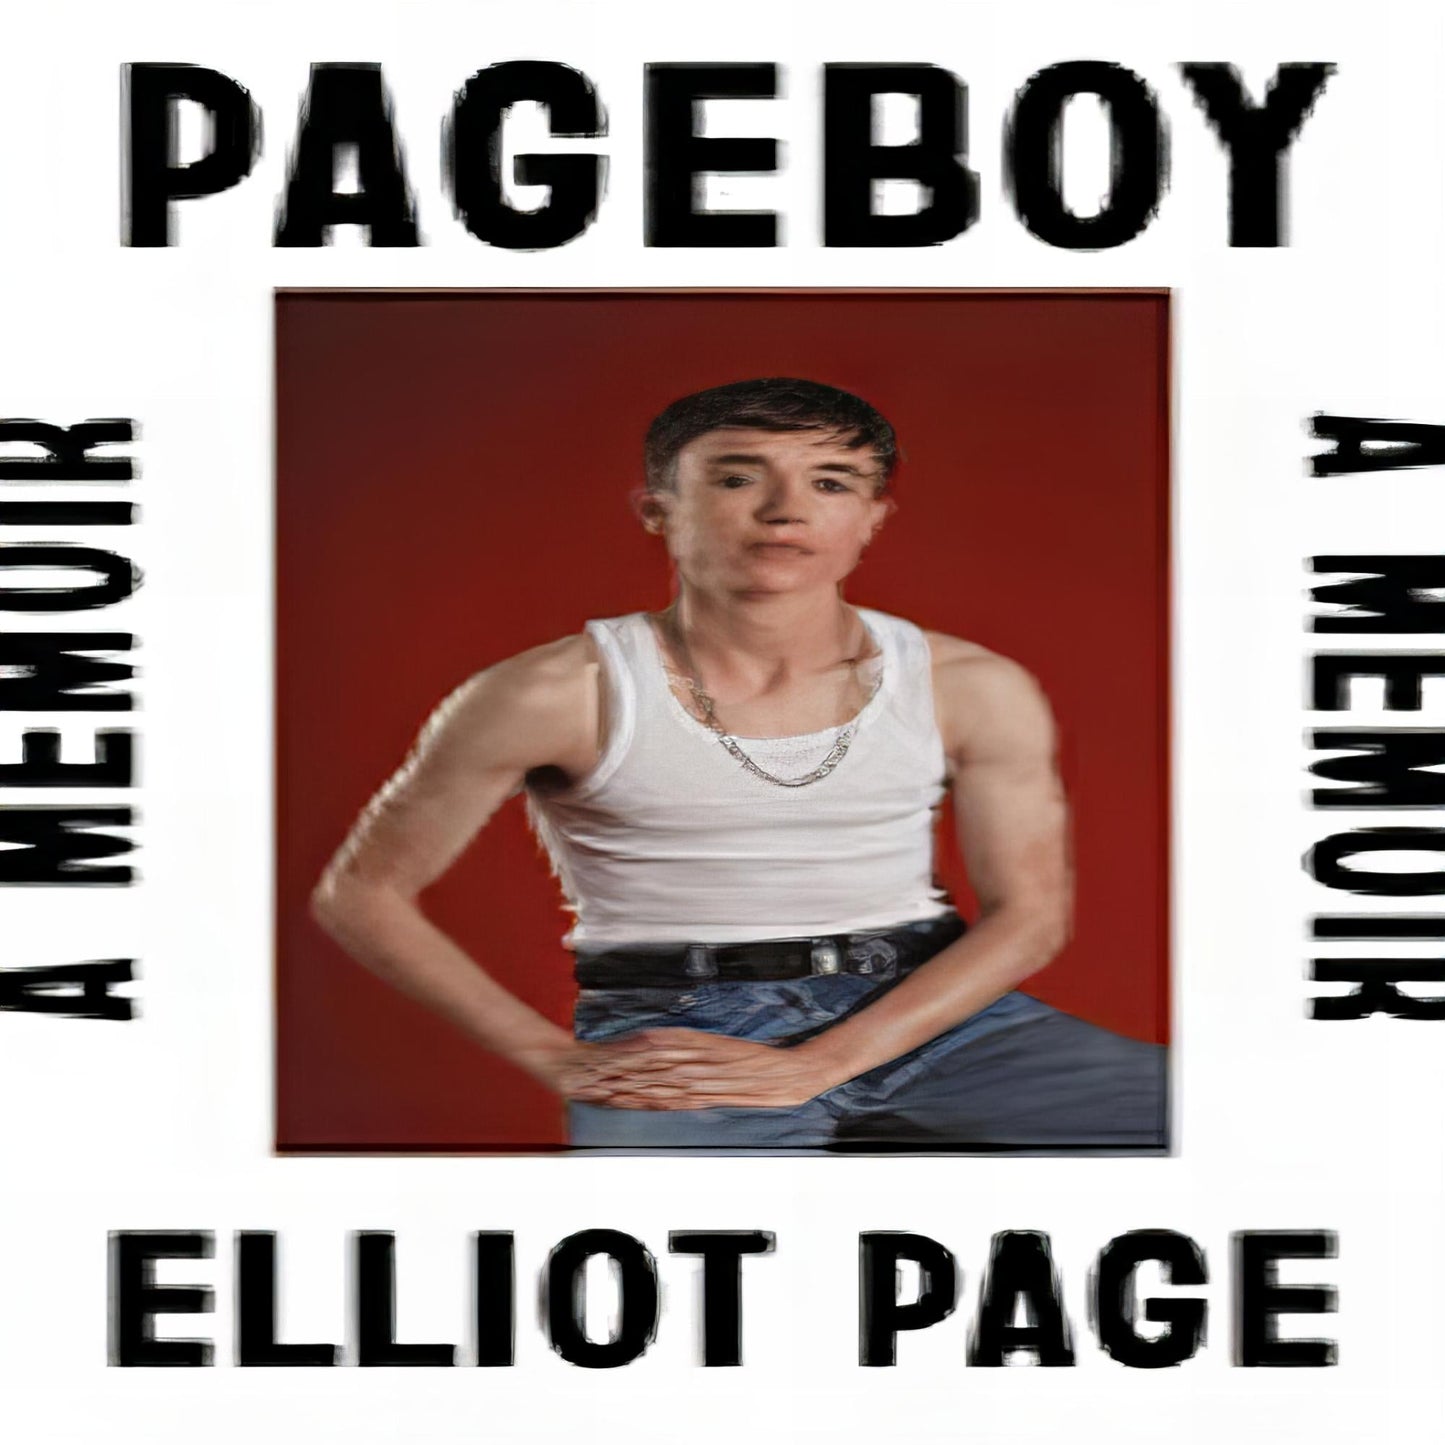 Pageboy: A Memoir255-111923-1250878357DPGBOOKSTORE.COM. Today's Bestsellers.